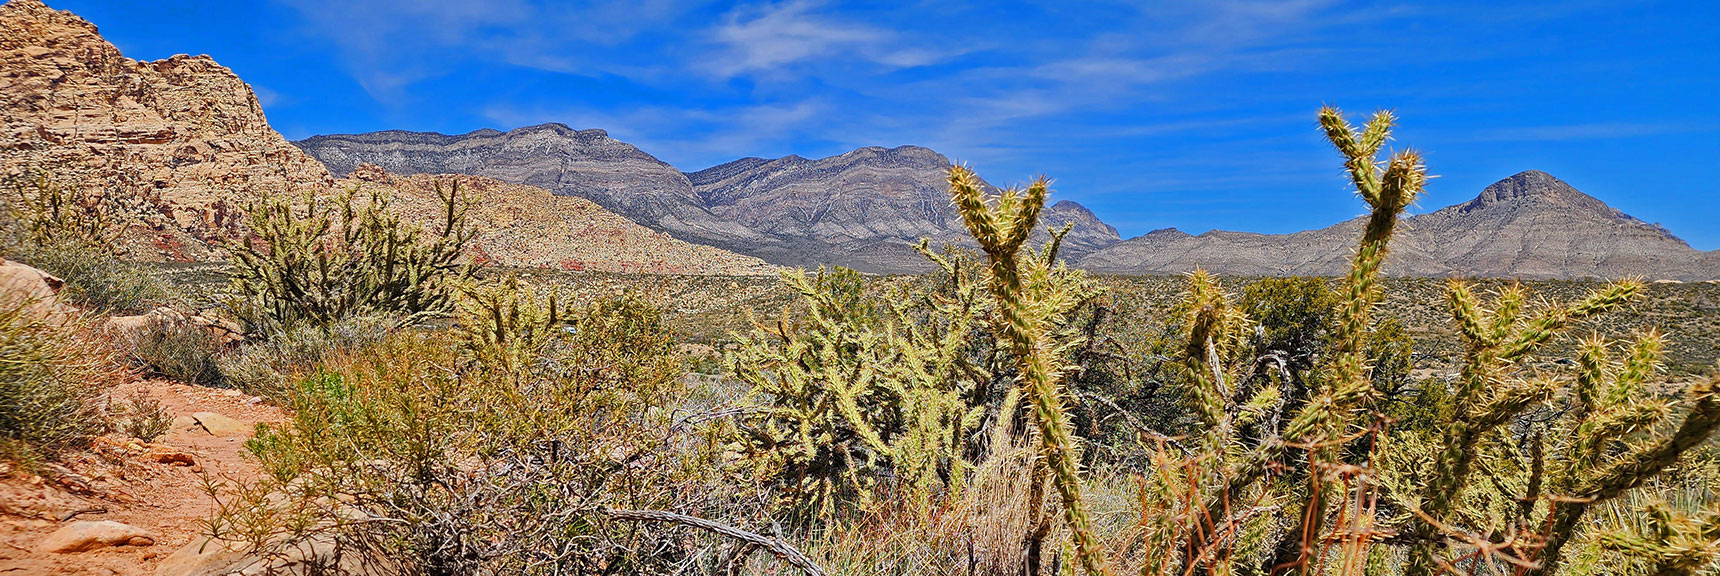 La Madre Mountains Cliffs; Turtlehead Peak | Dales Trail | Red Rock Canyon National Conservation Area, Nevada | David Smith | LasVegasAreaTrails.com